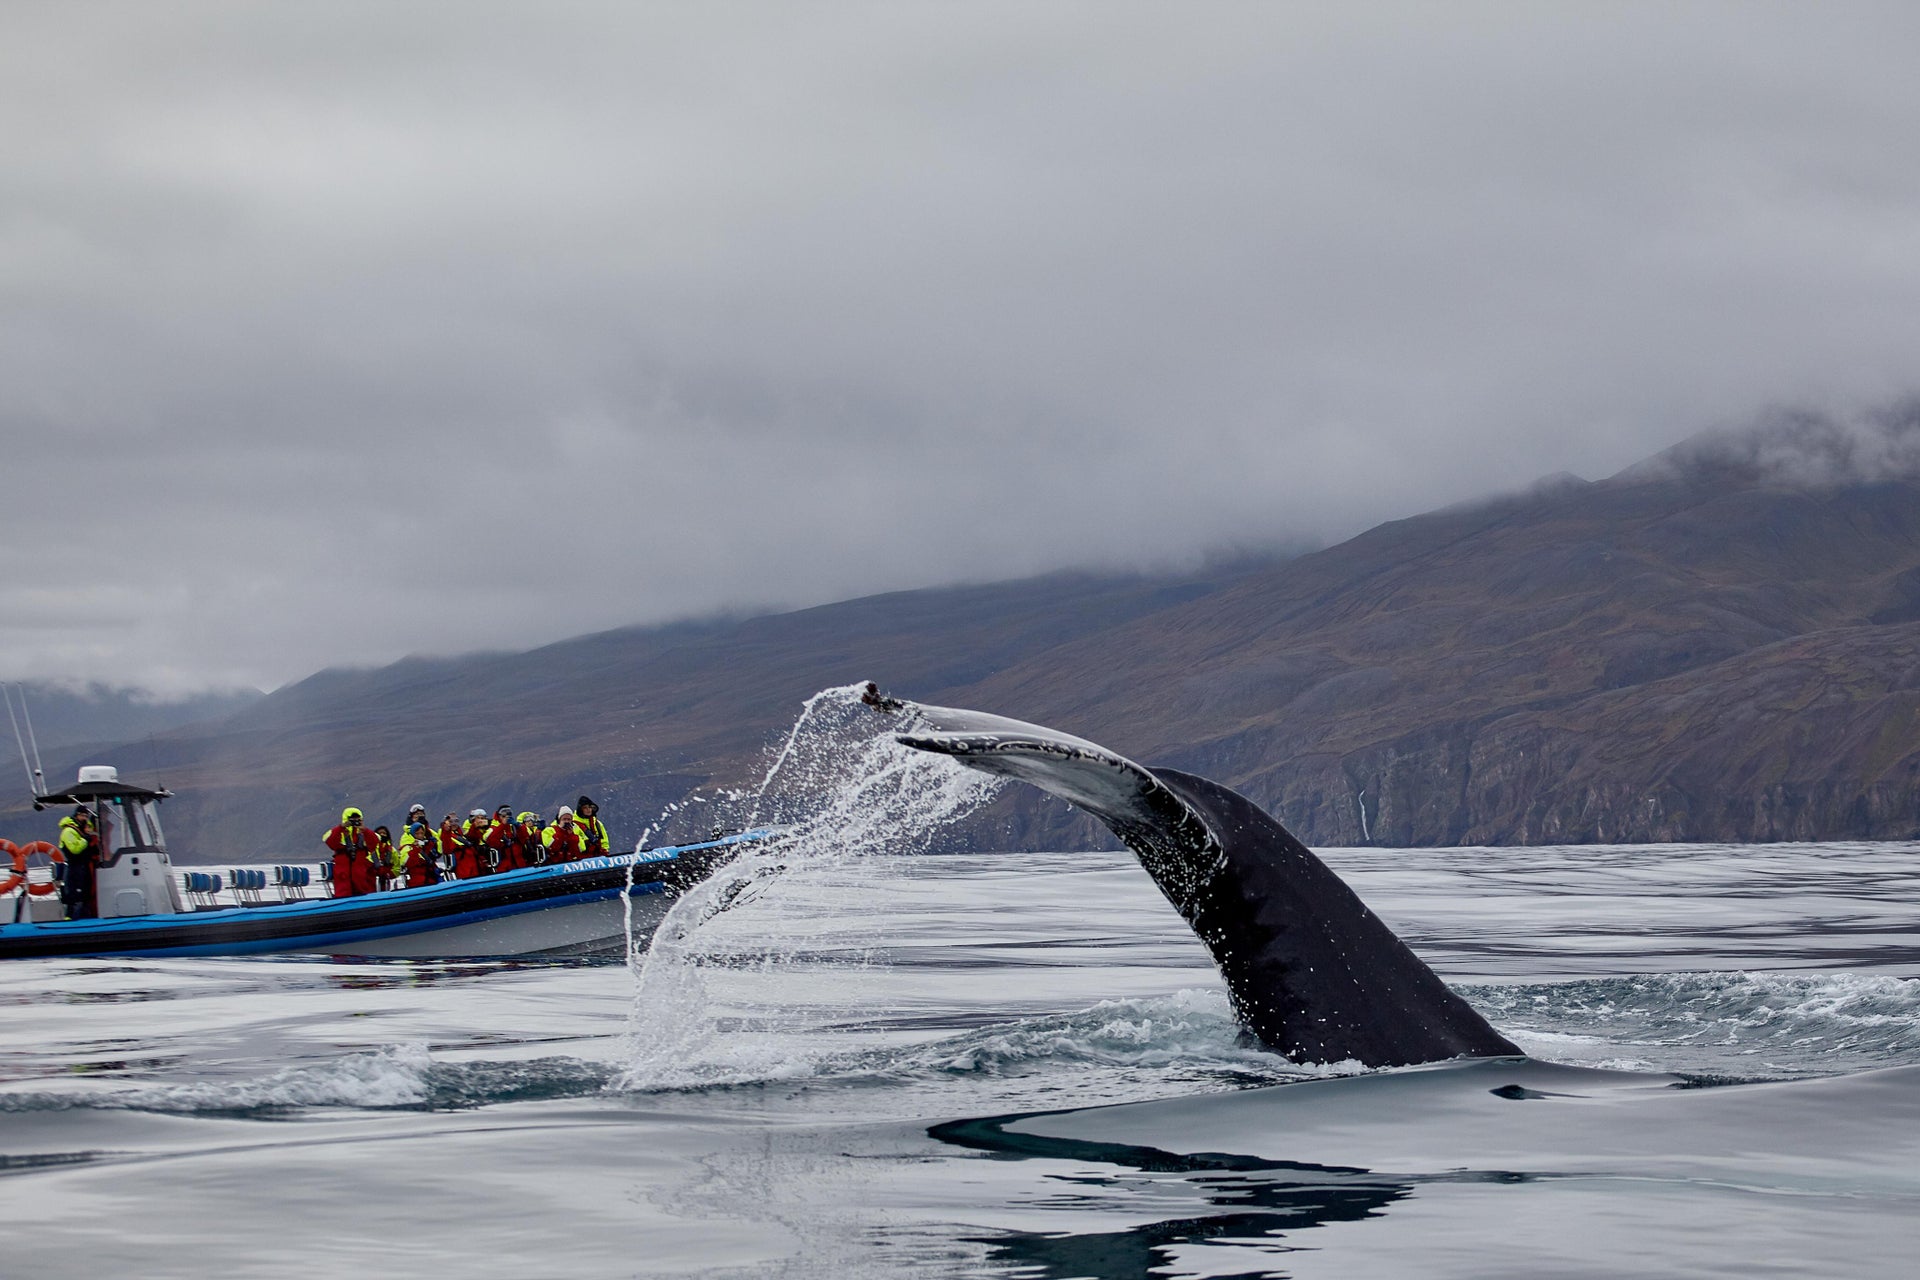 Avistamento de baleias de lancha